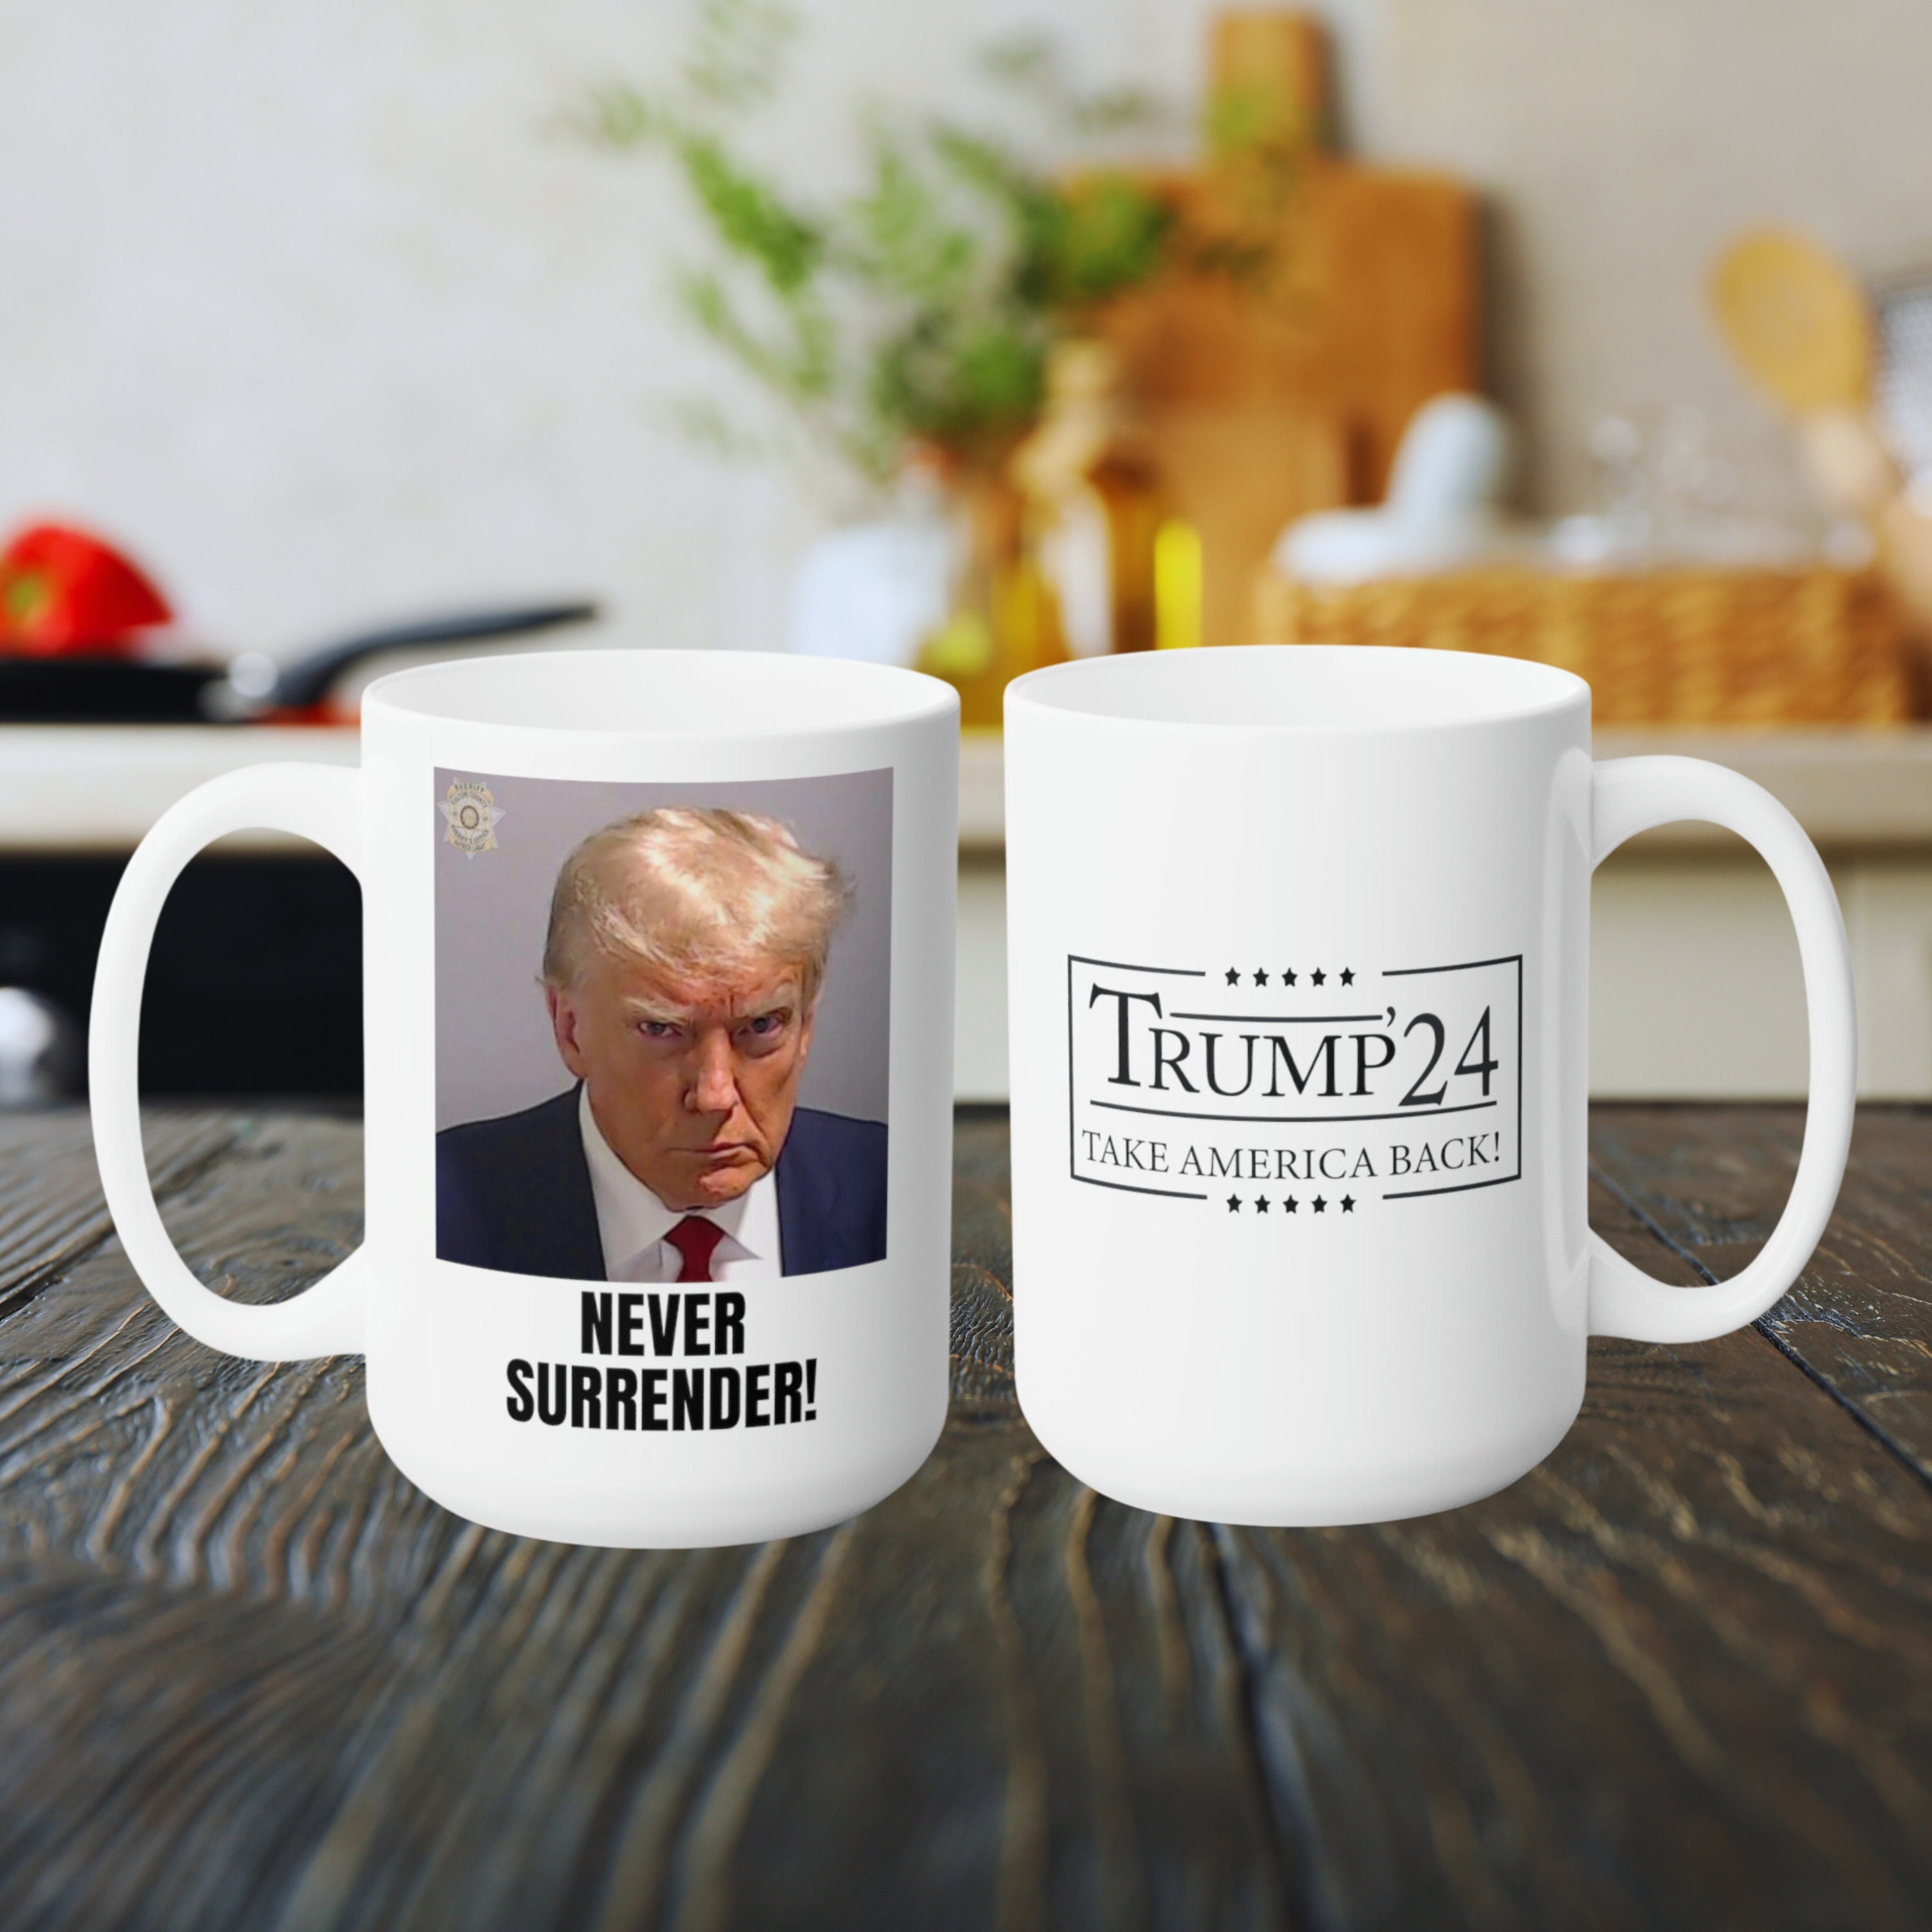 GRAPHICS & MORE Trump Mugshot Guilty Ceramic Coffee Mug, Novelty Gift Mugs  for Coffee, Tea and Hot Drinks, 11oz, White